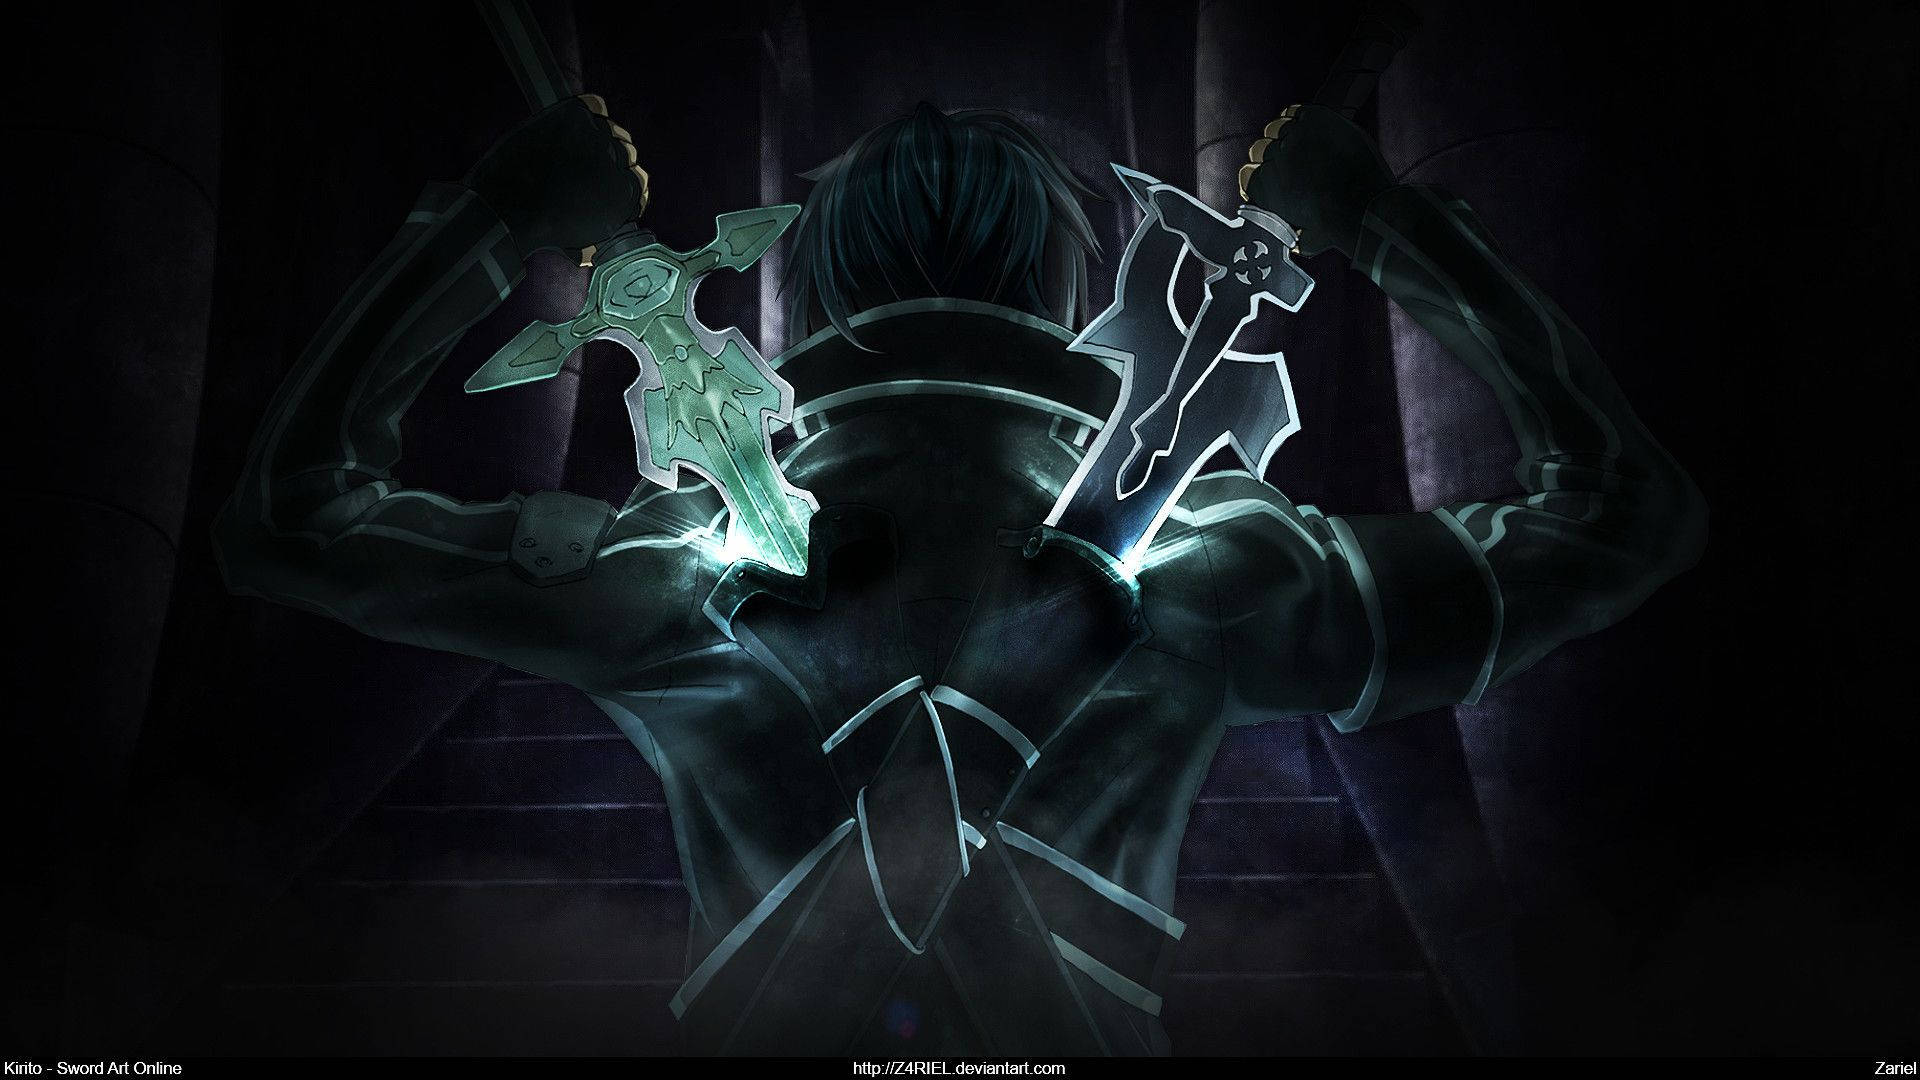 Kirito Glows in the Dark in Sword Art Online Wallpaper